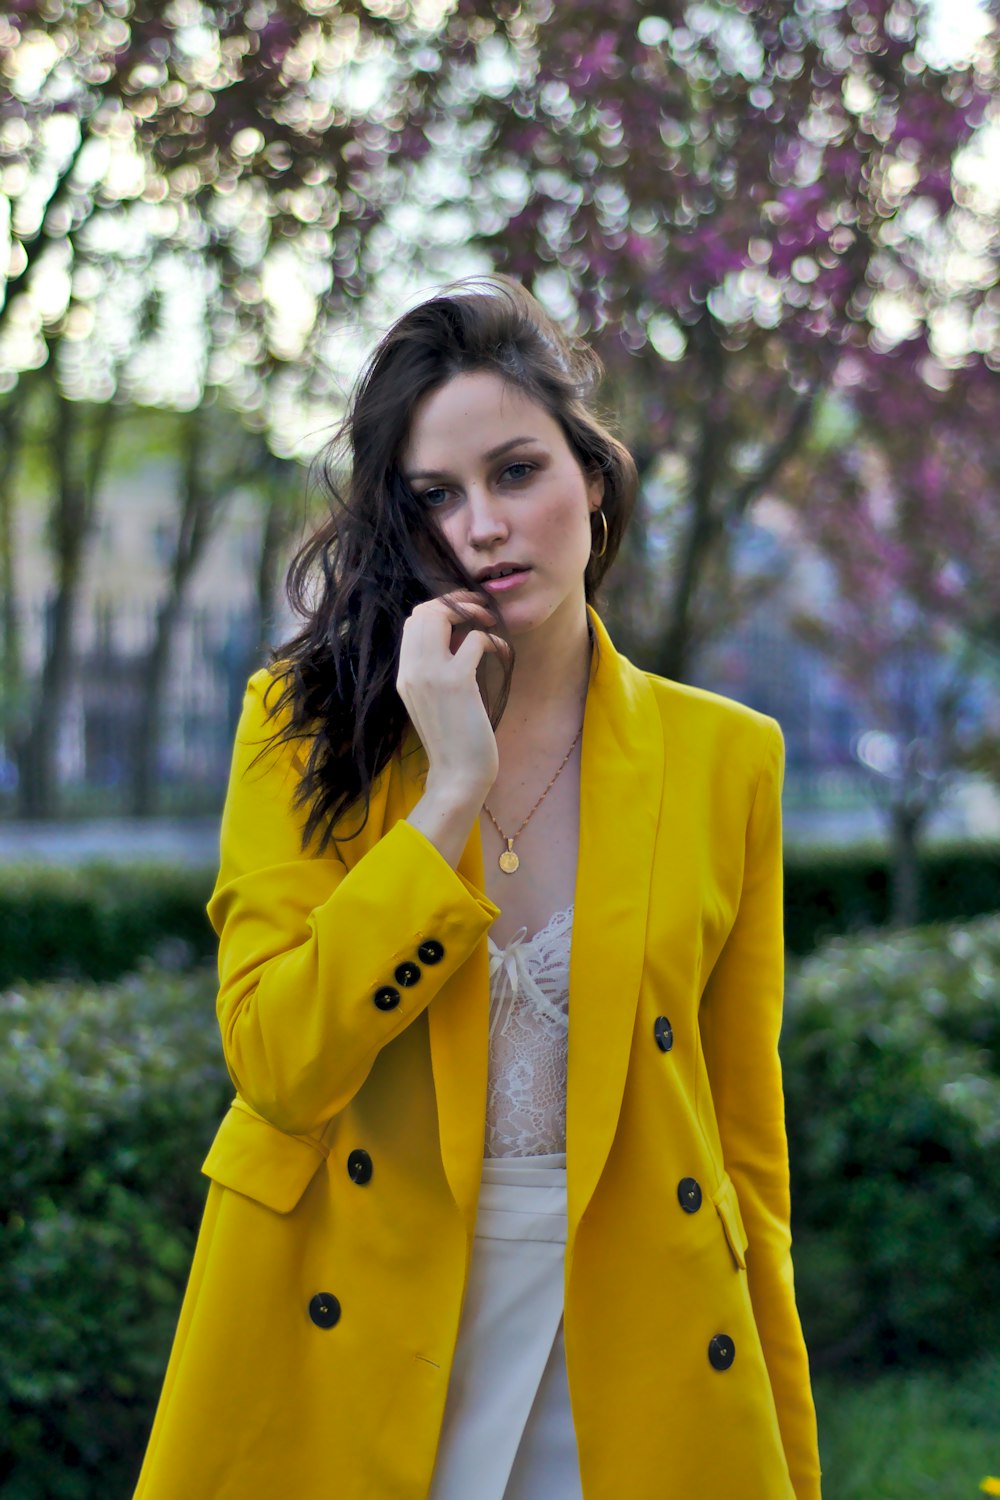 Foto abrigo amarillo – Imagen San petersburgo gratis en Unsplash